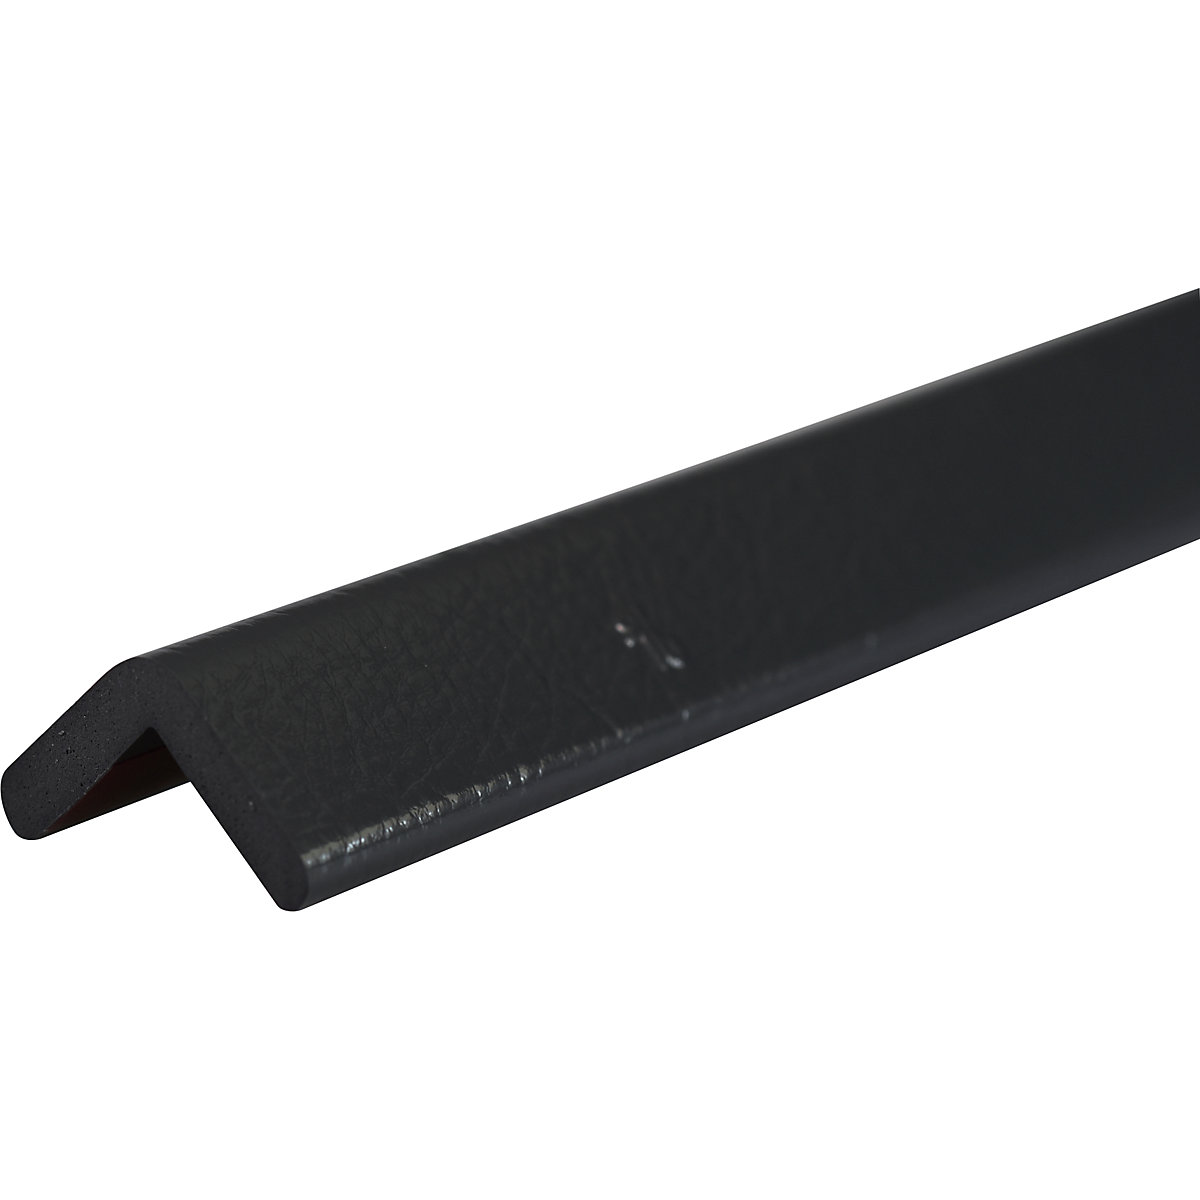 Knuffi®-hoekbescherming – SHG, type H, stuk van 1 m, zwart-18